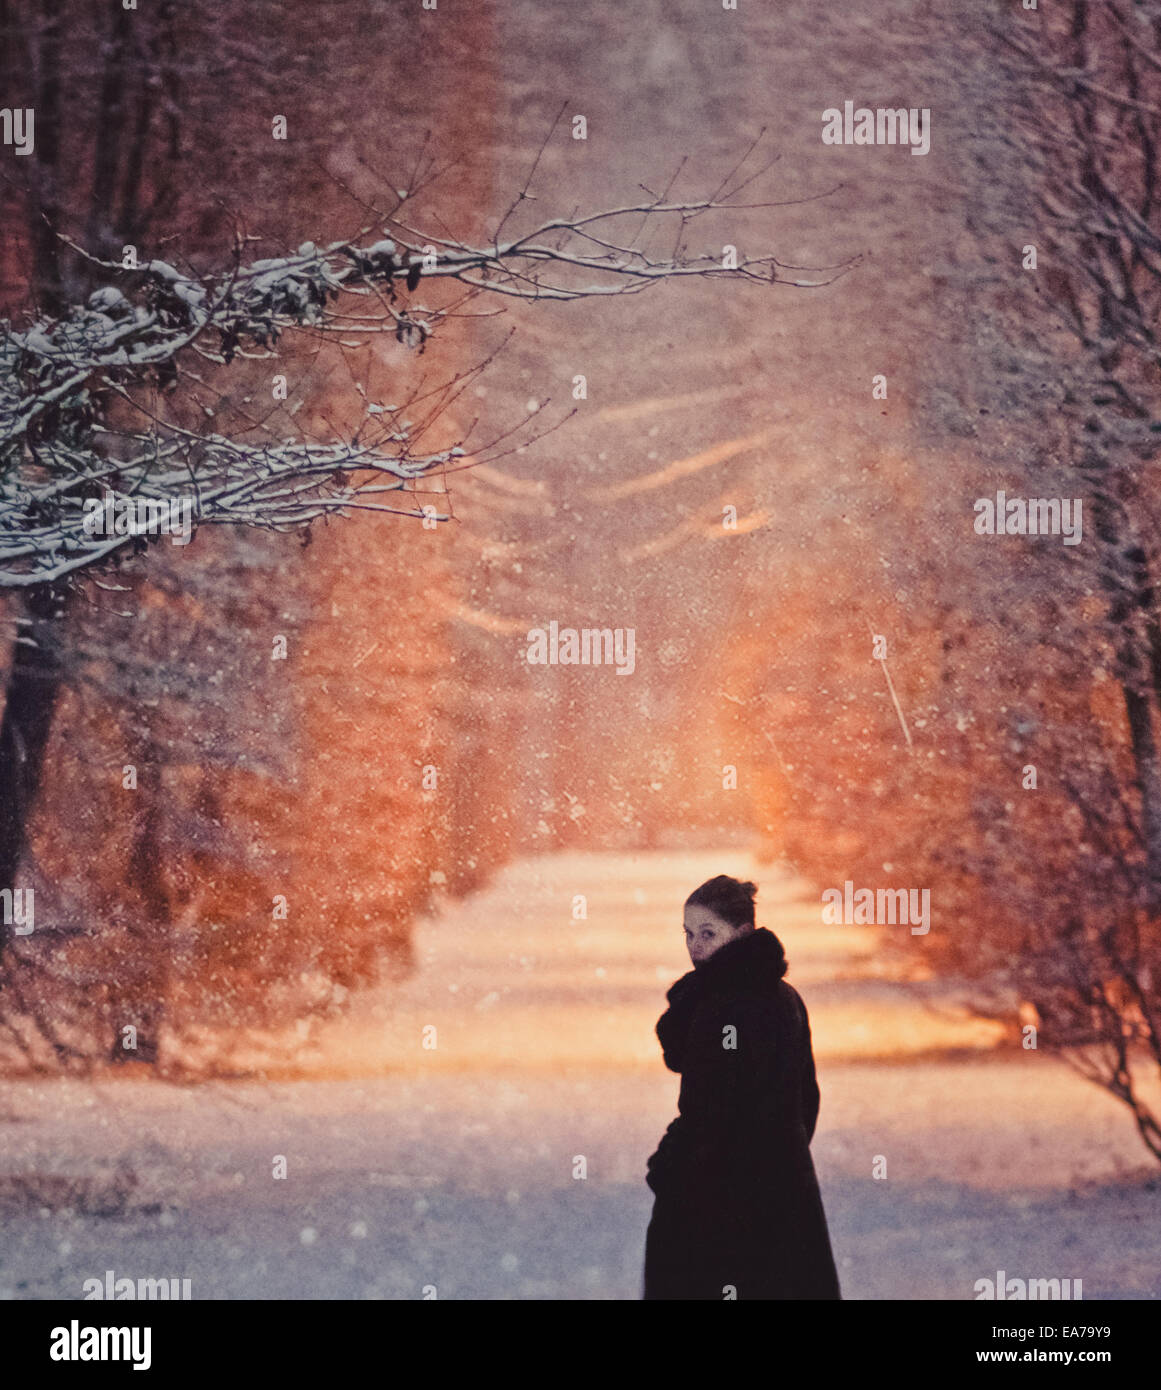 a stroll in a snowy park Stock Photo